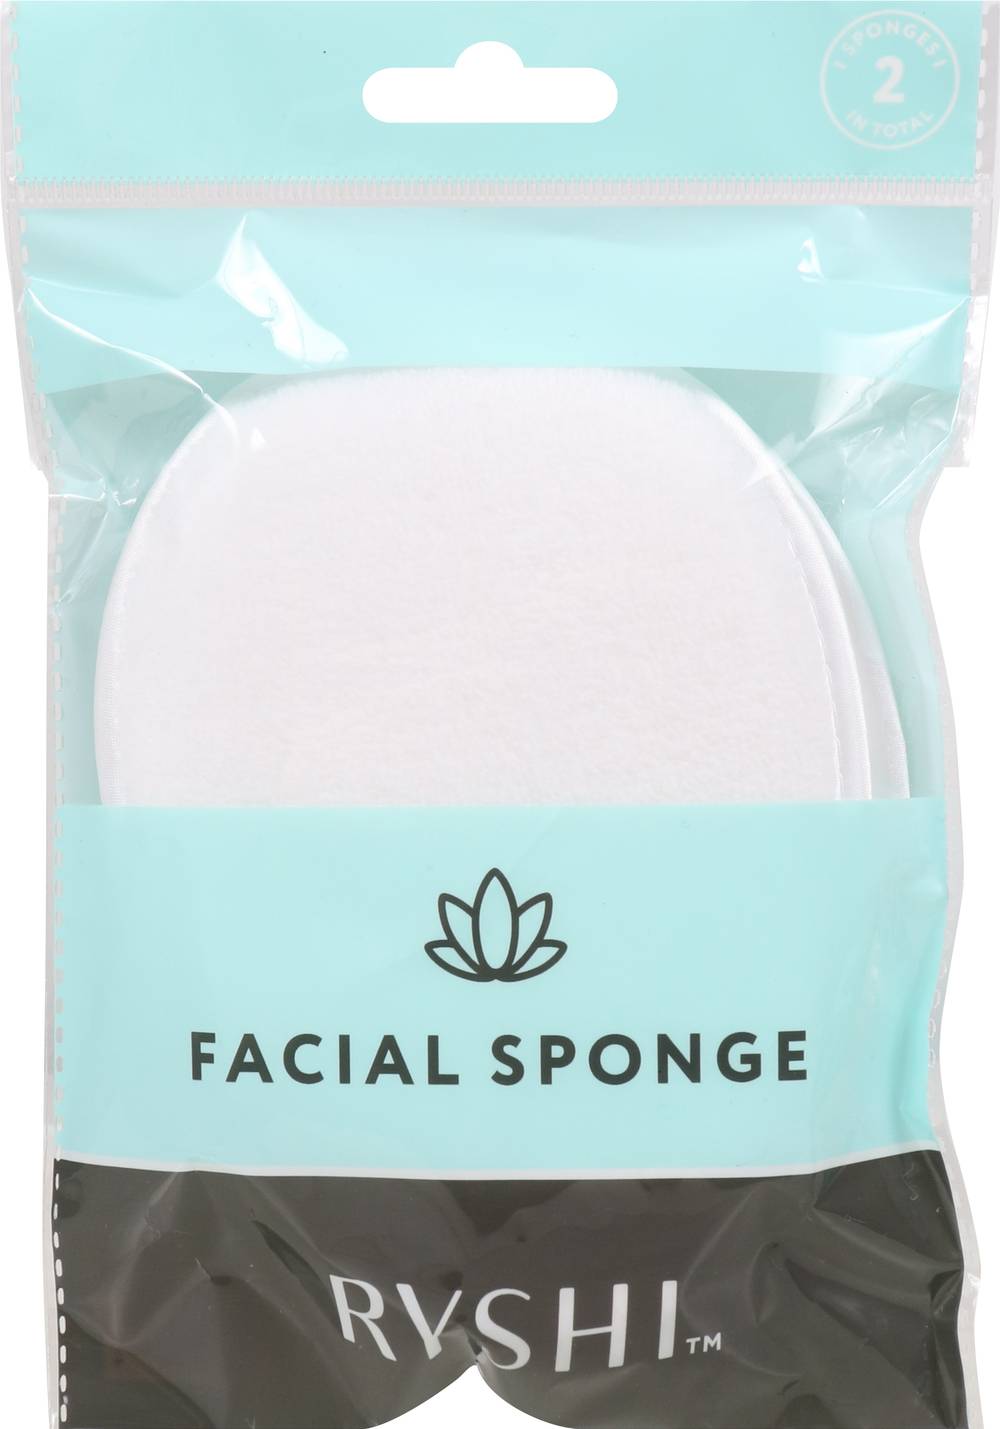 Ryshi Facial Sponge Exfolating - 2 ct